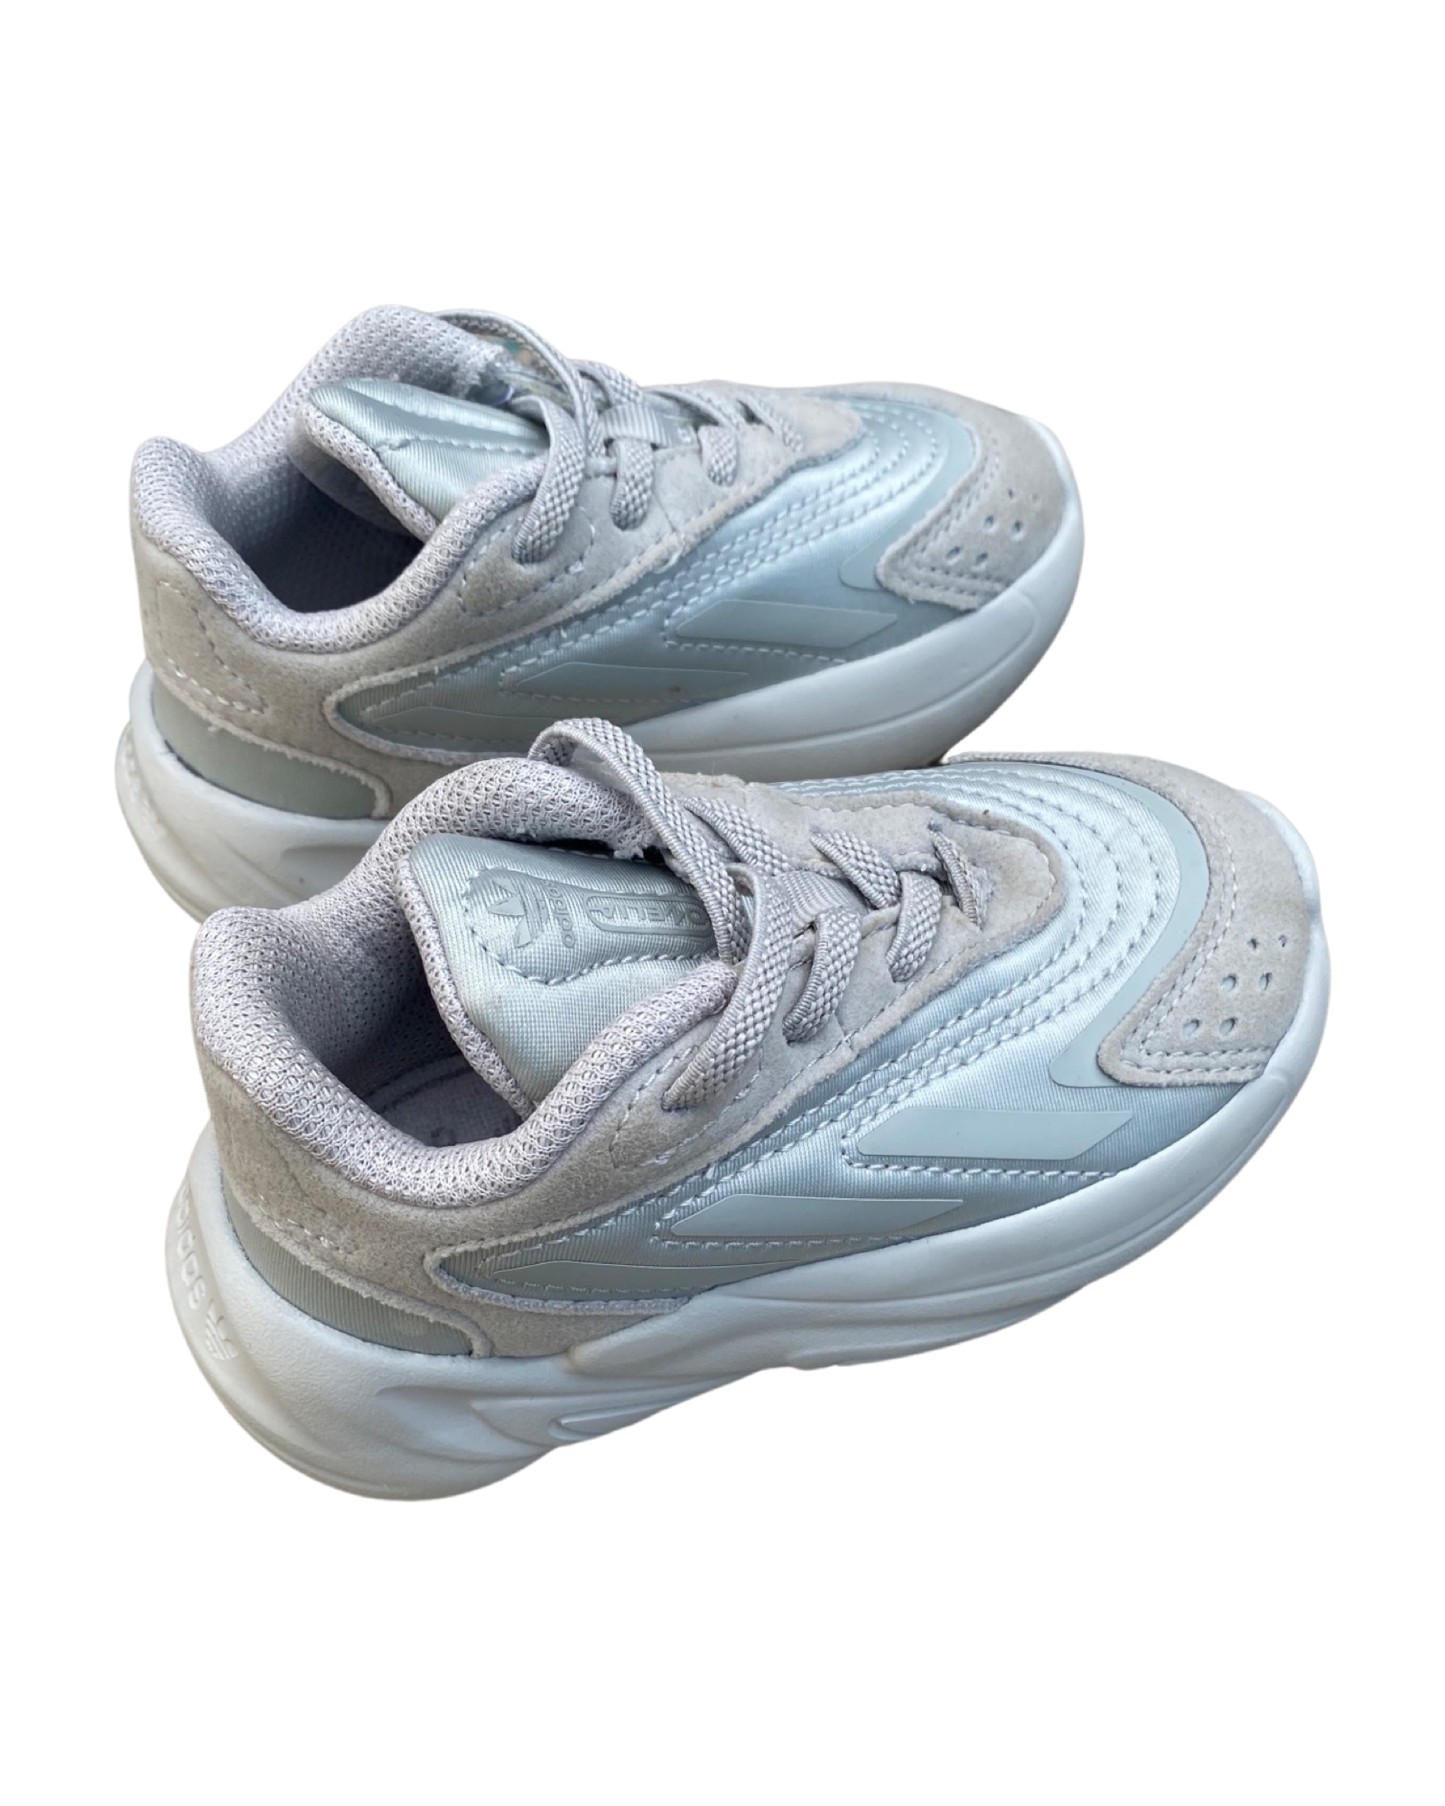 Adidas Ozelia toddler trainers in grey/silver colourway (size UK5/EU21)